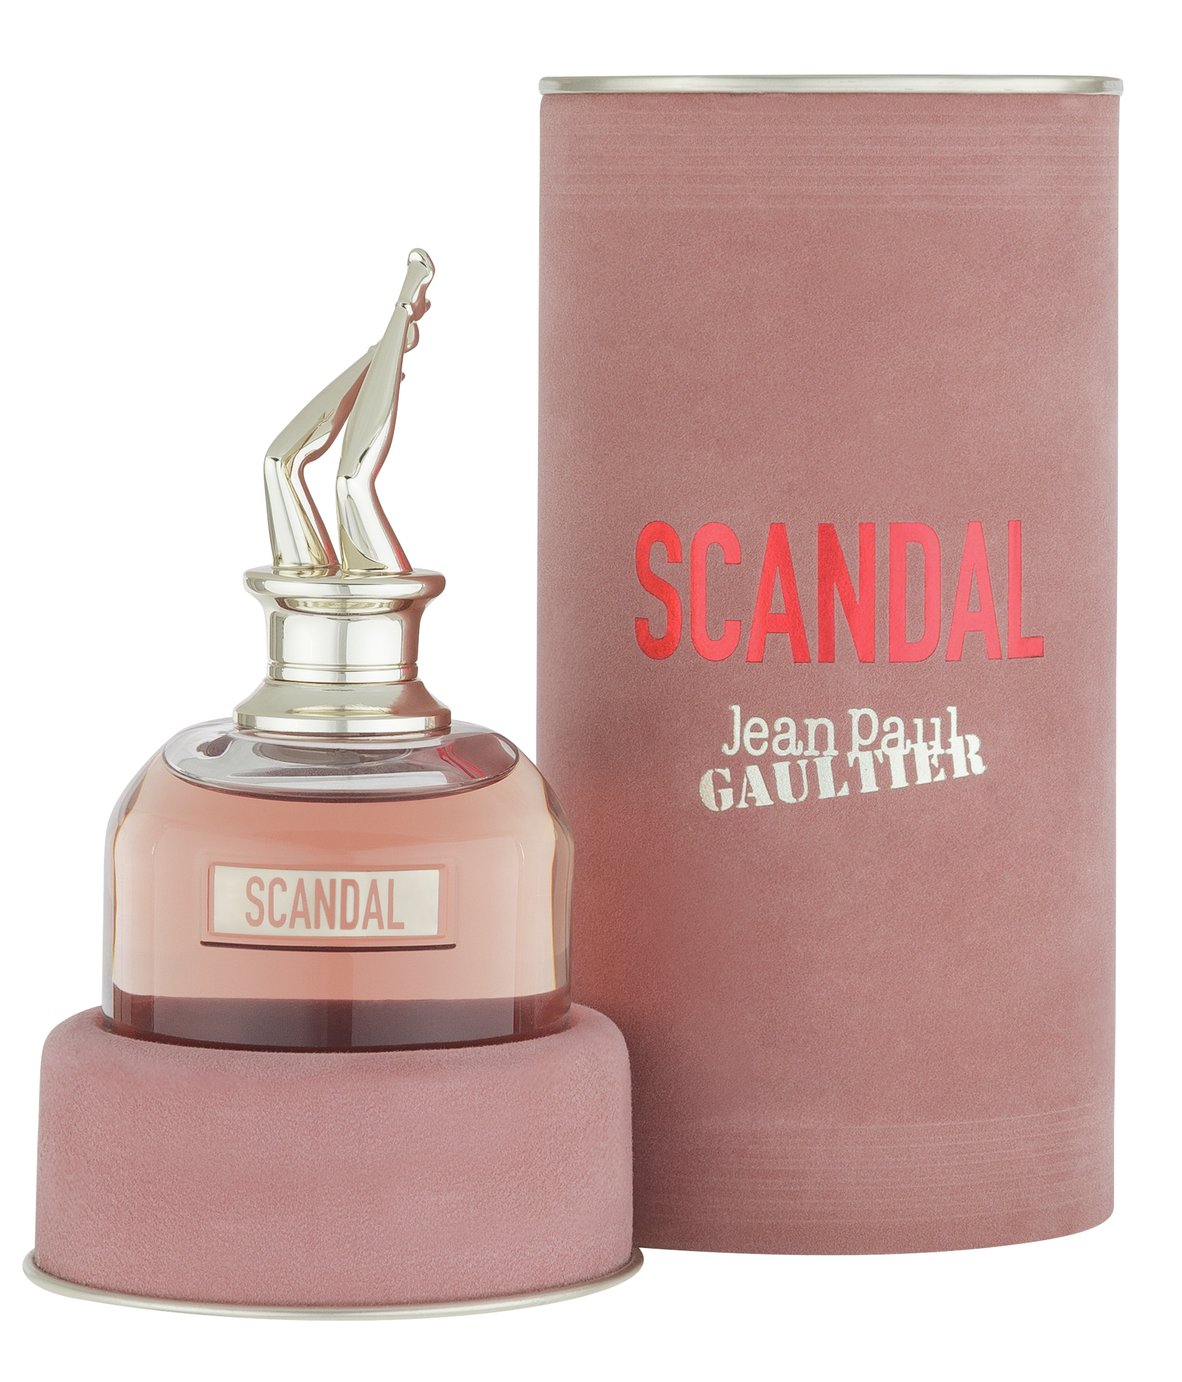 Jean Paul Gaultier Scandal for Women Eau de Parfum - 30ml